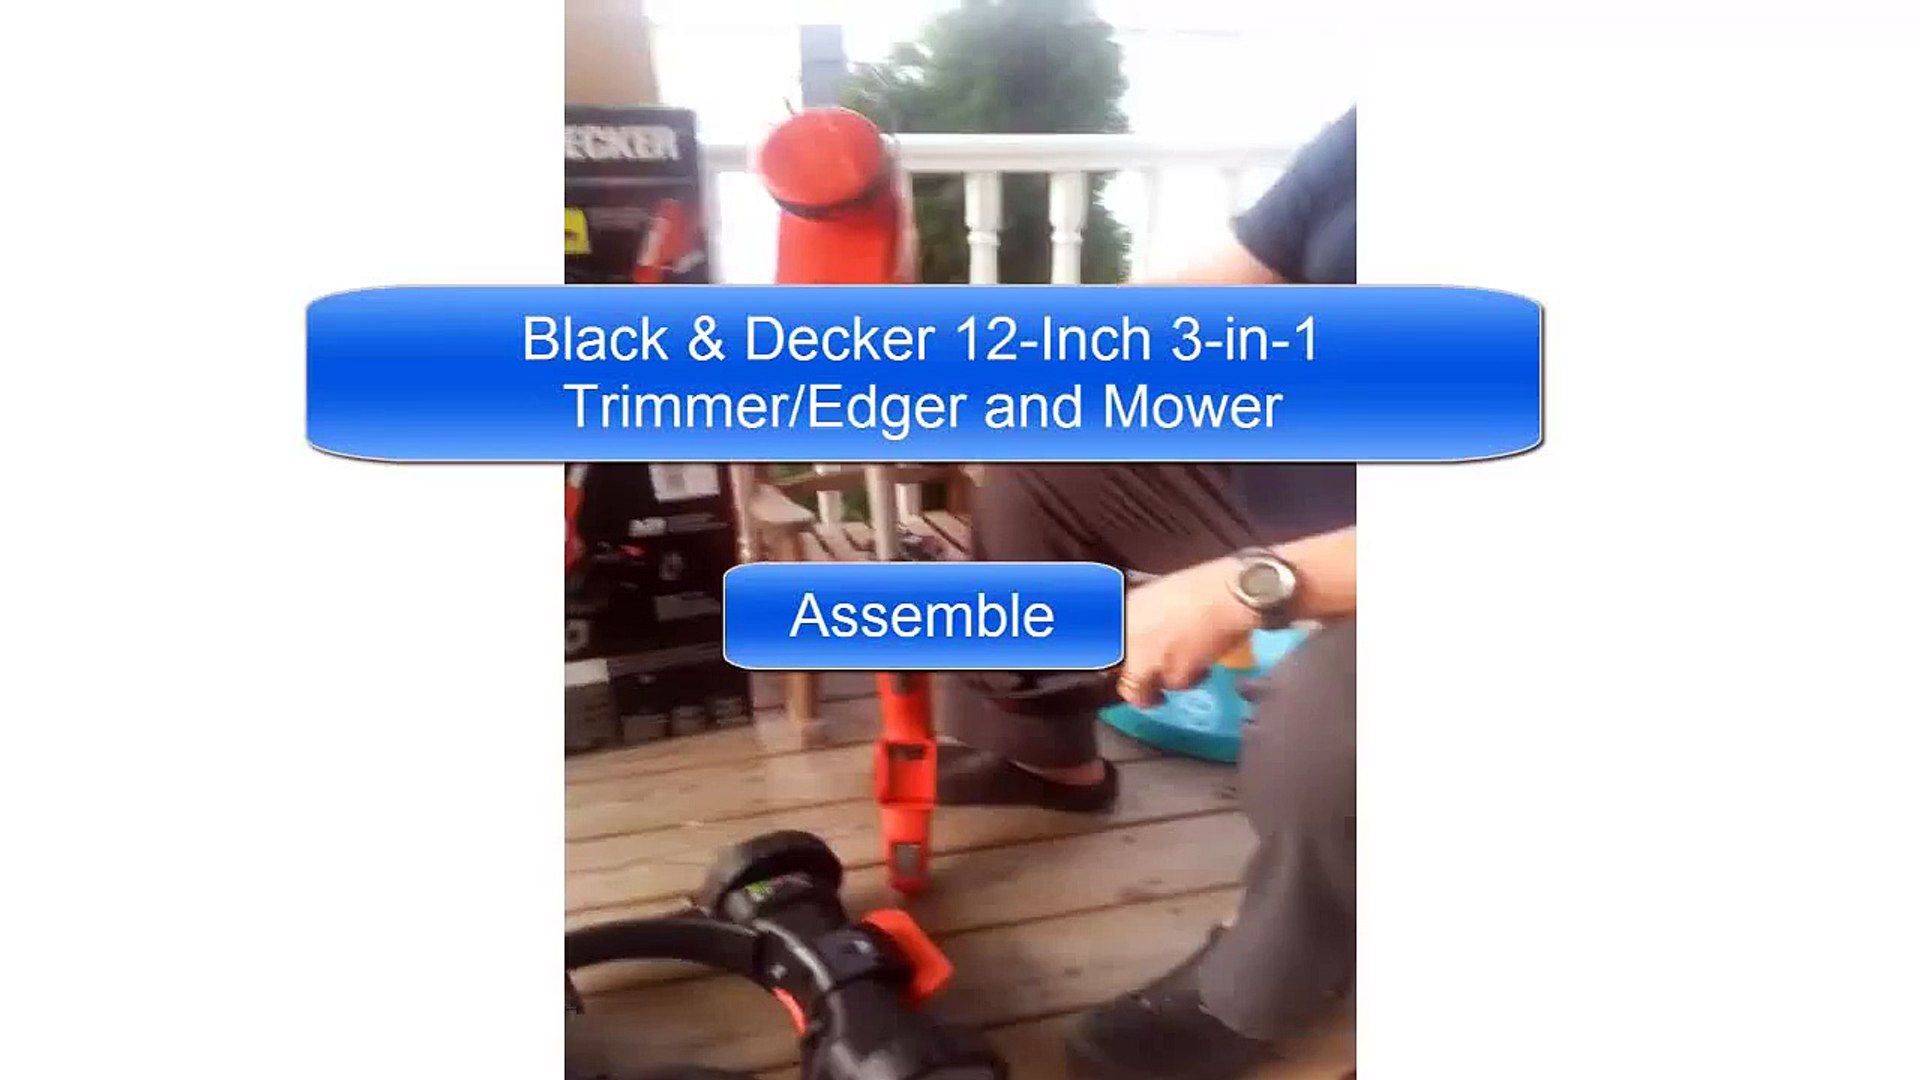 Black and Decker 18v Grasshog Lawn Trimmer review. 